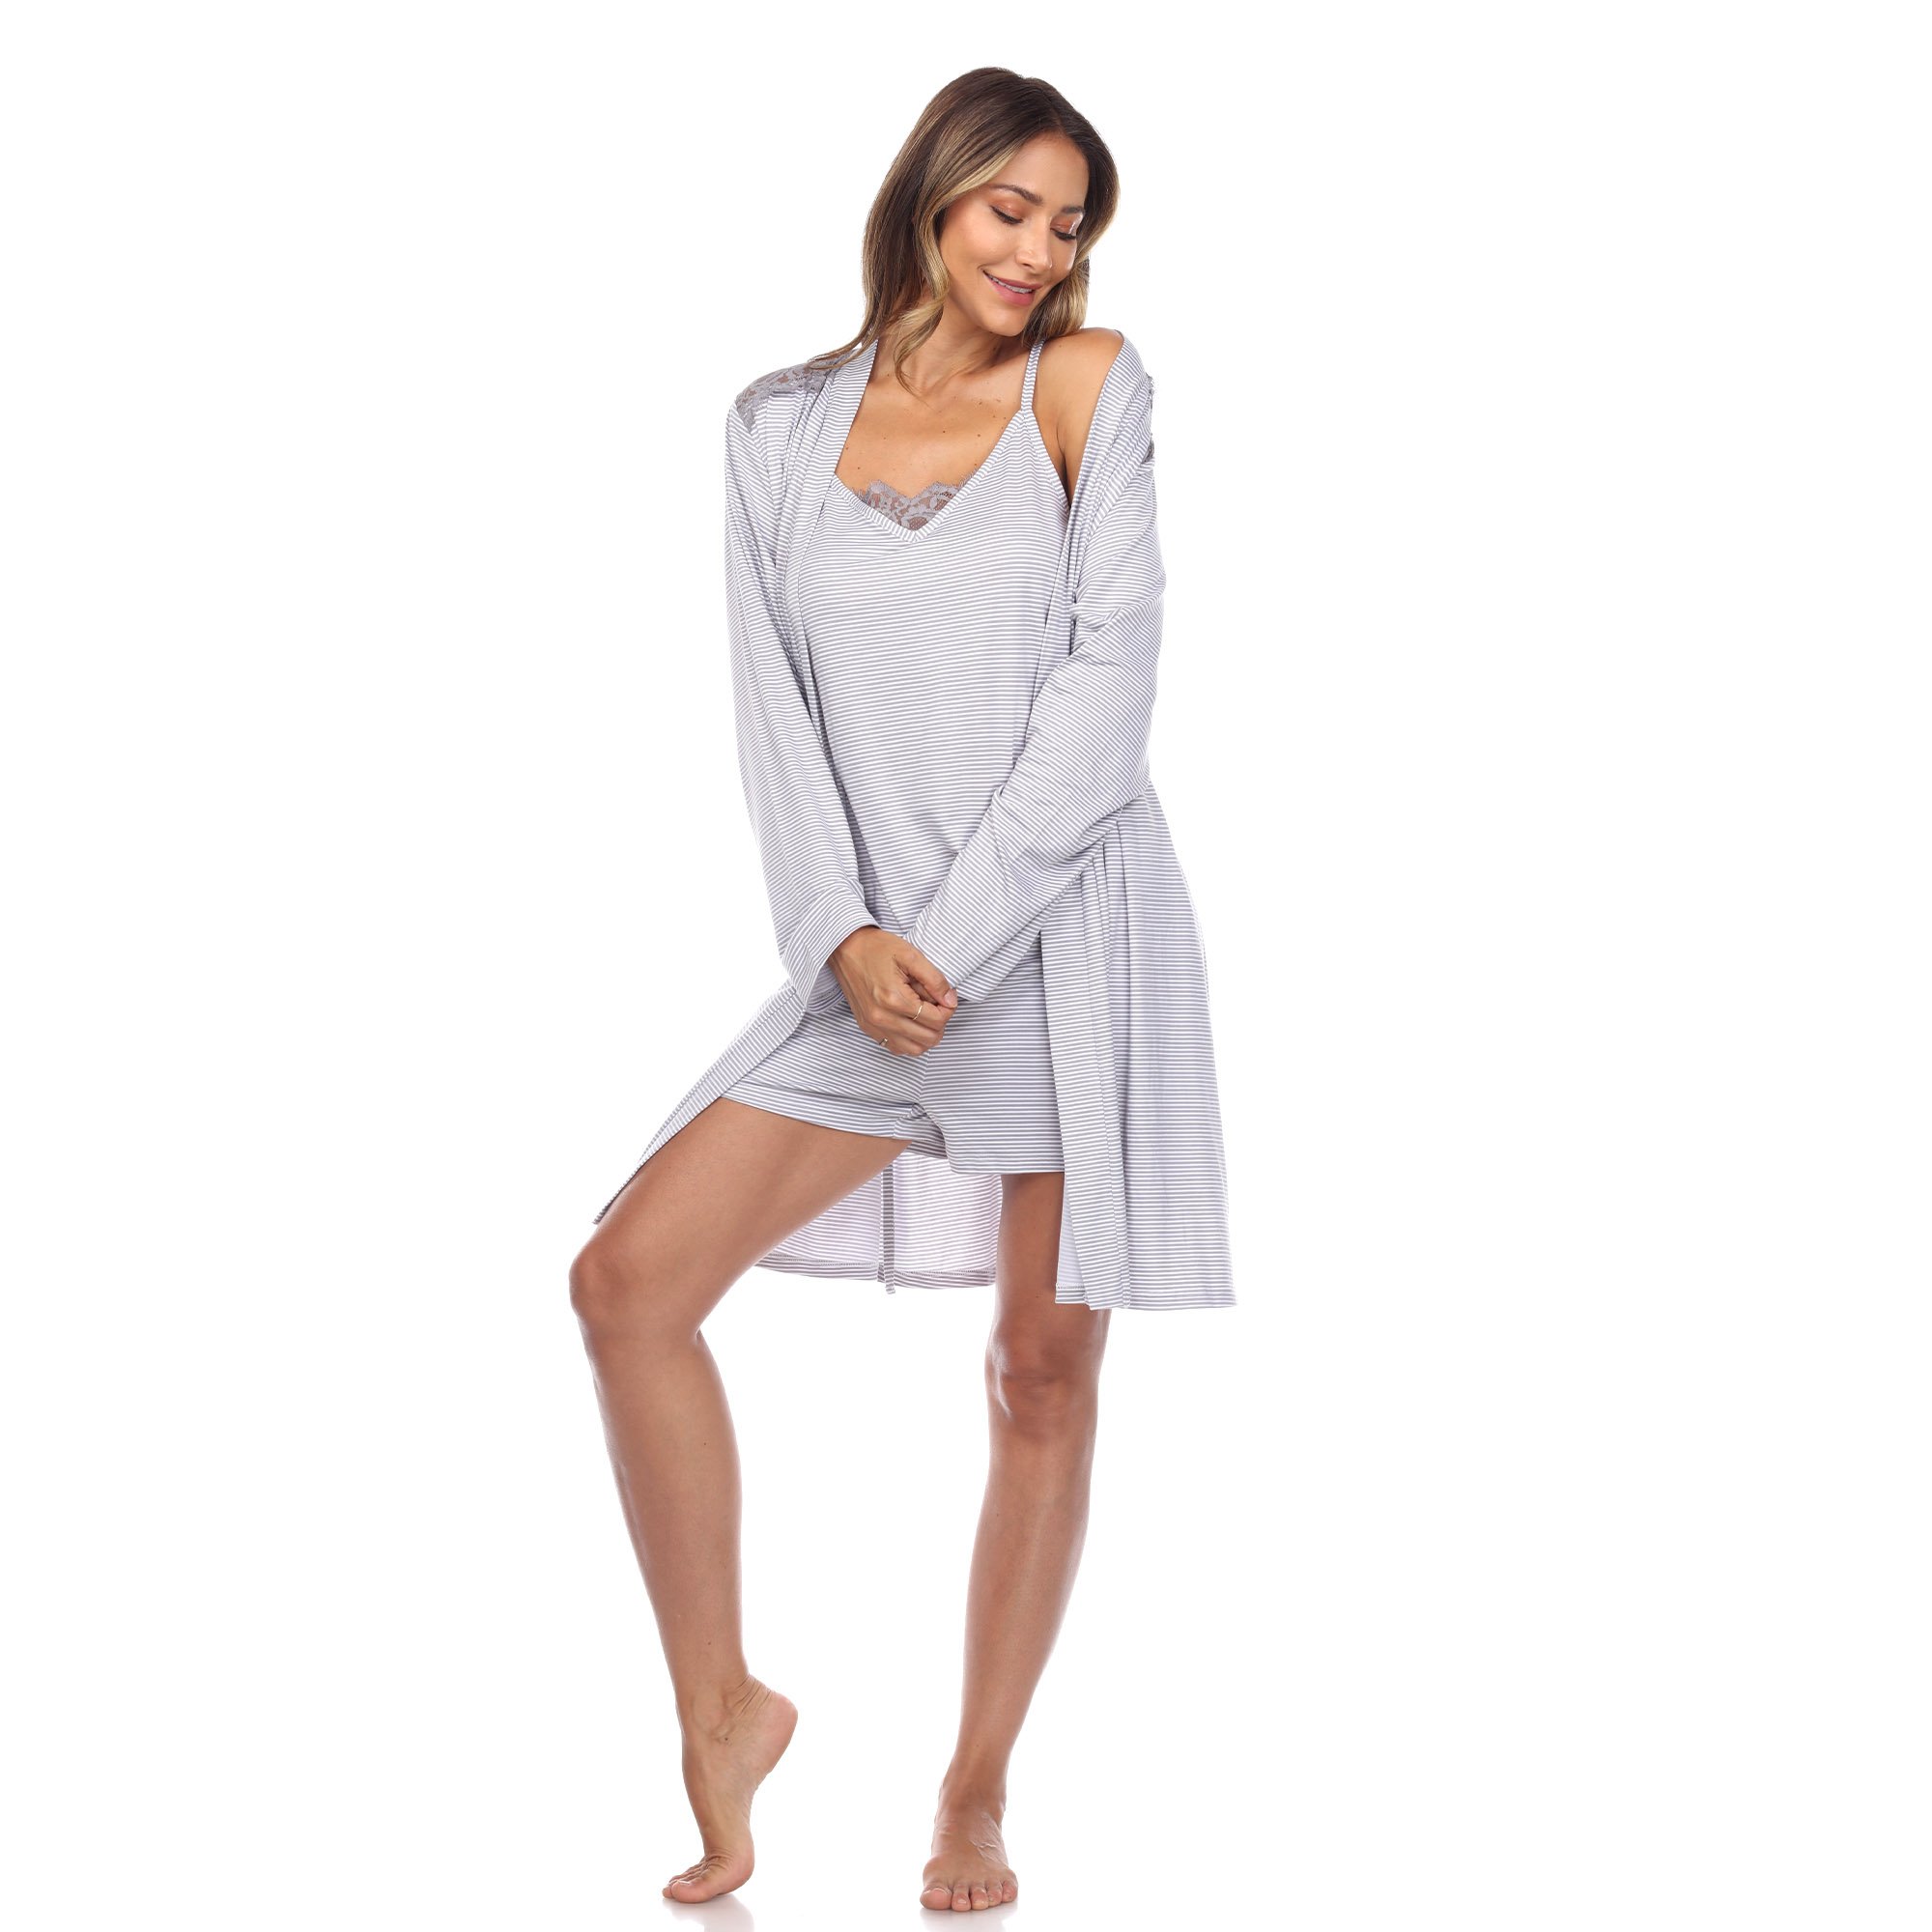 White Mark Women's 3-Piece Striped Camo Top, Shorts & Robe Matching Pajama Set - Grey, X-Large